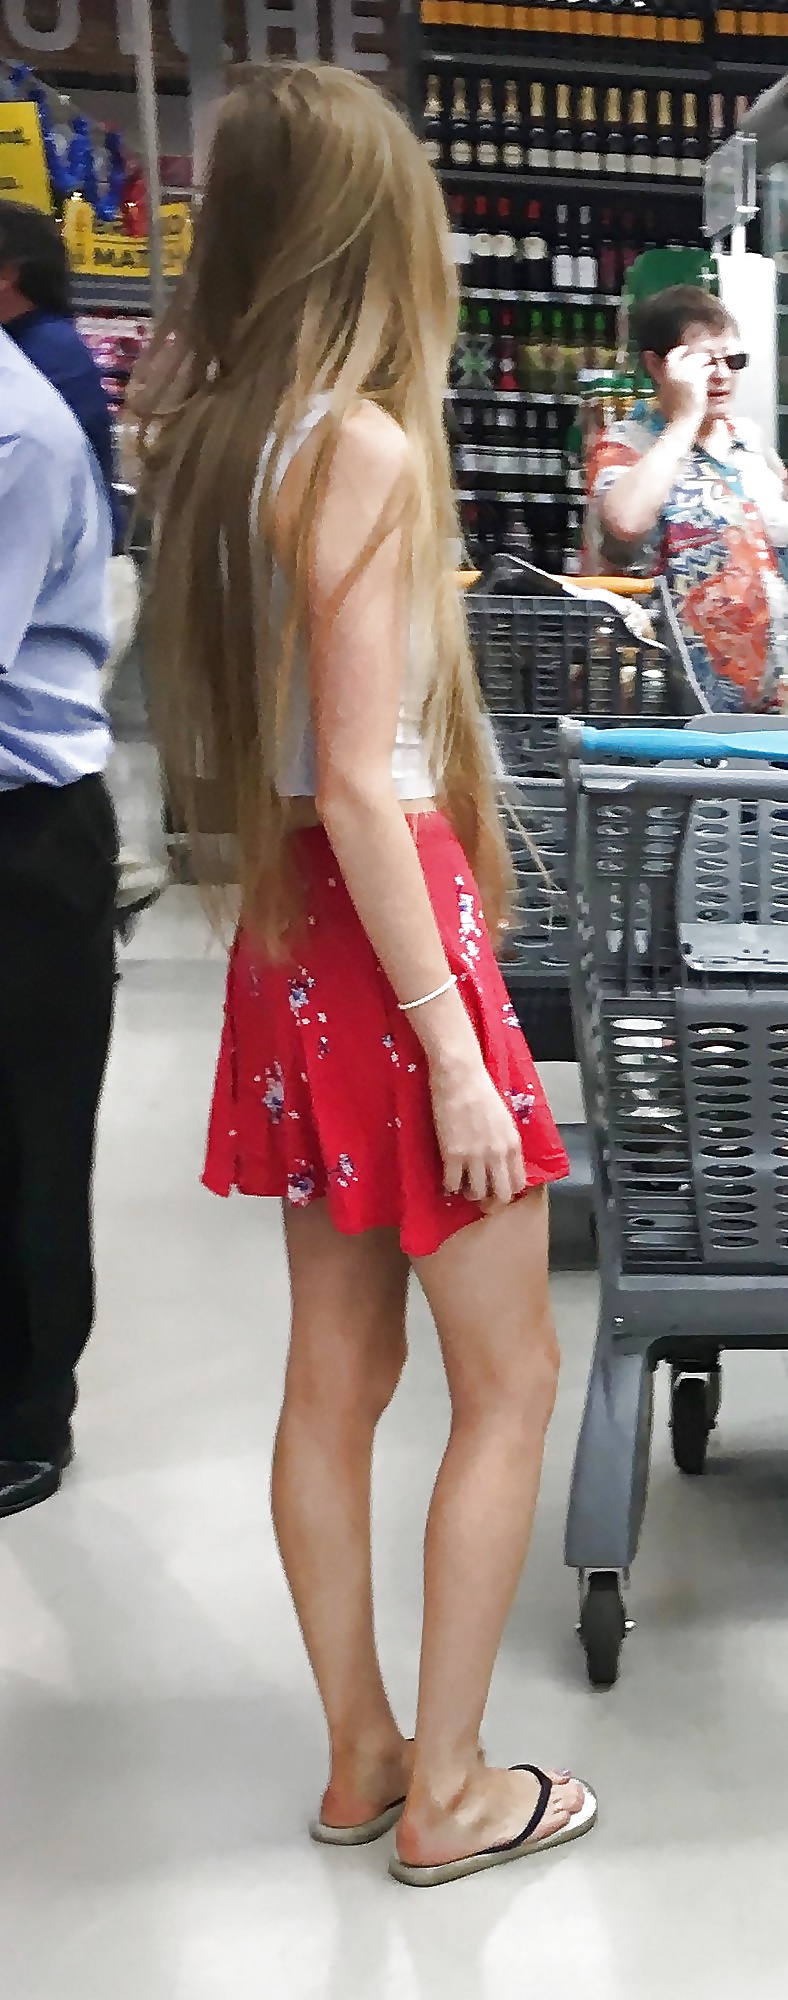 Skinny long blonde hair mall teen (6/15)